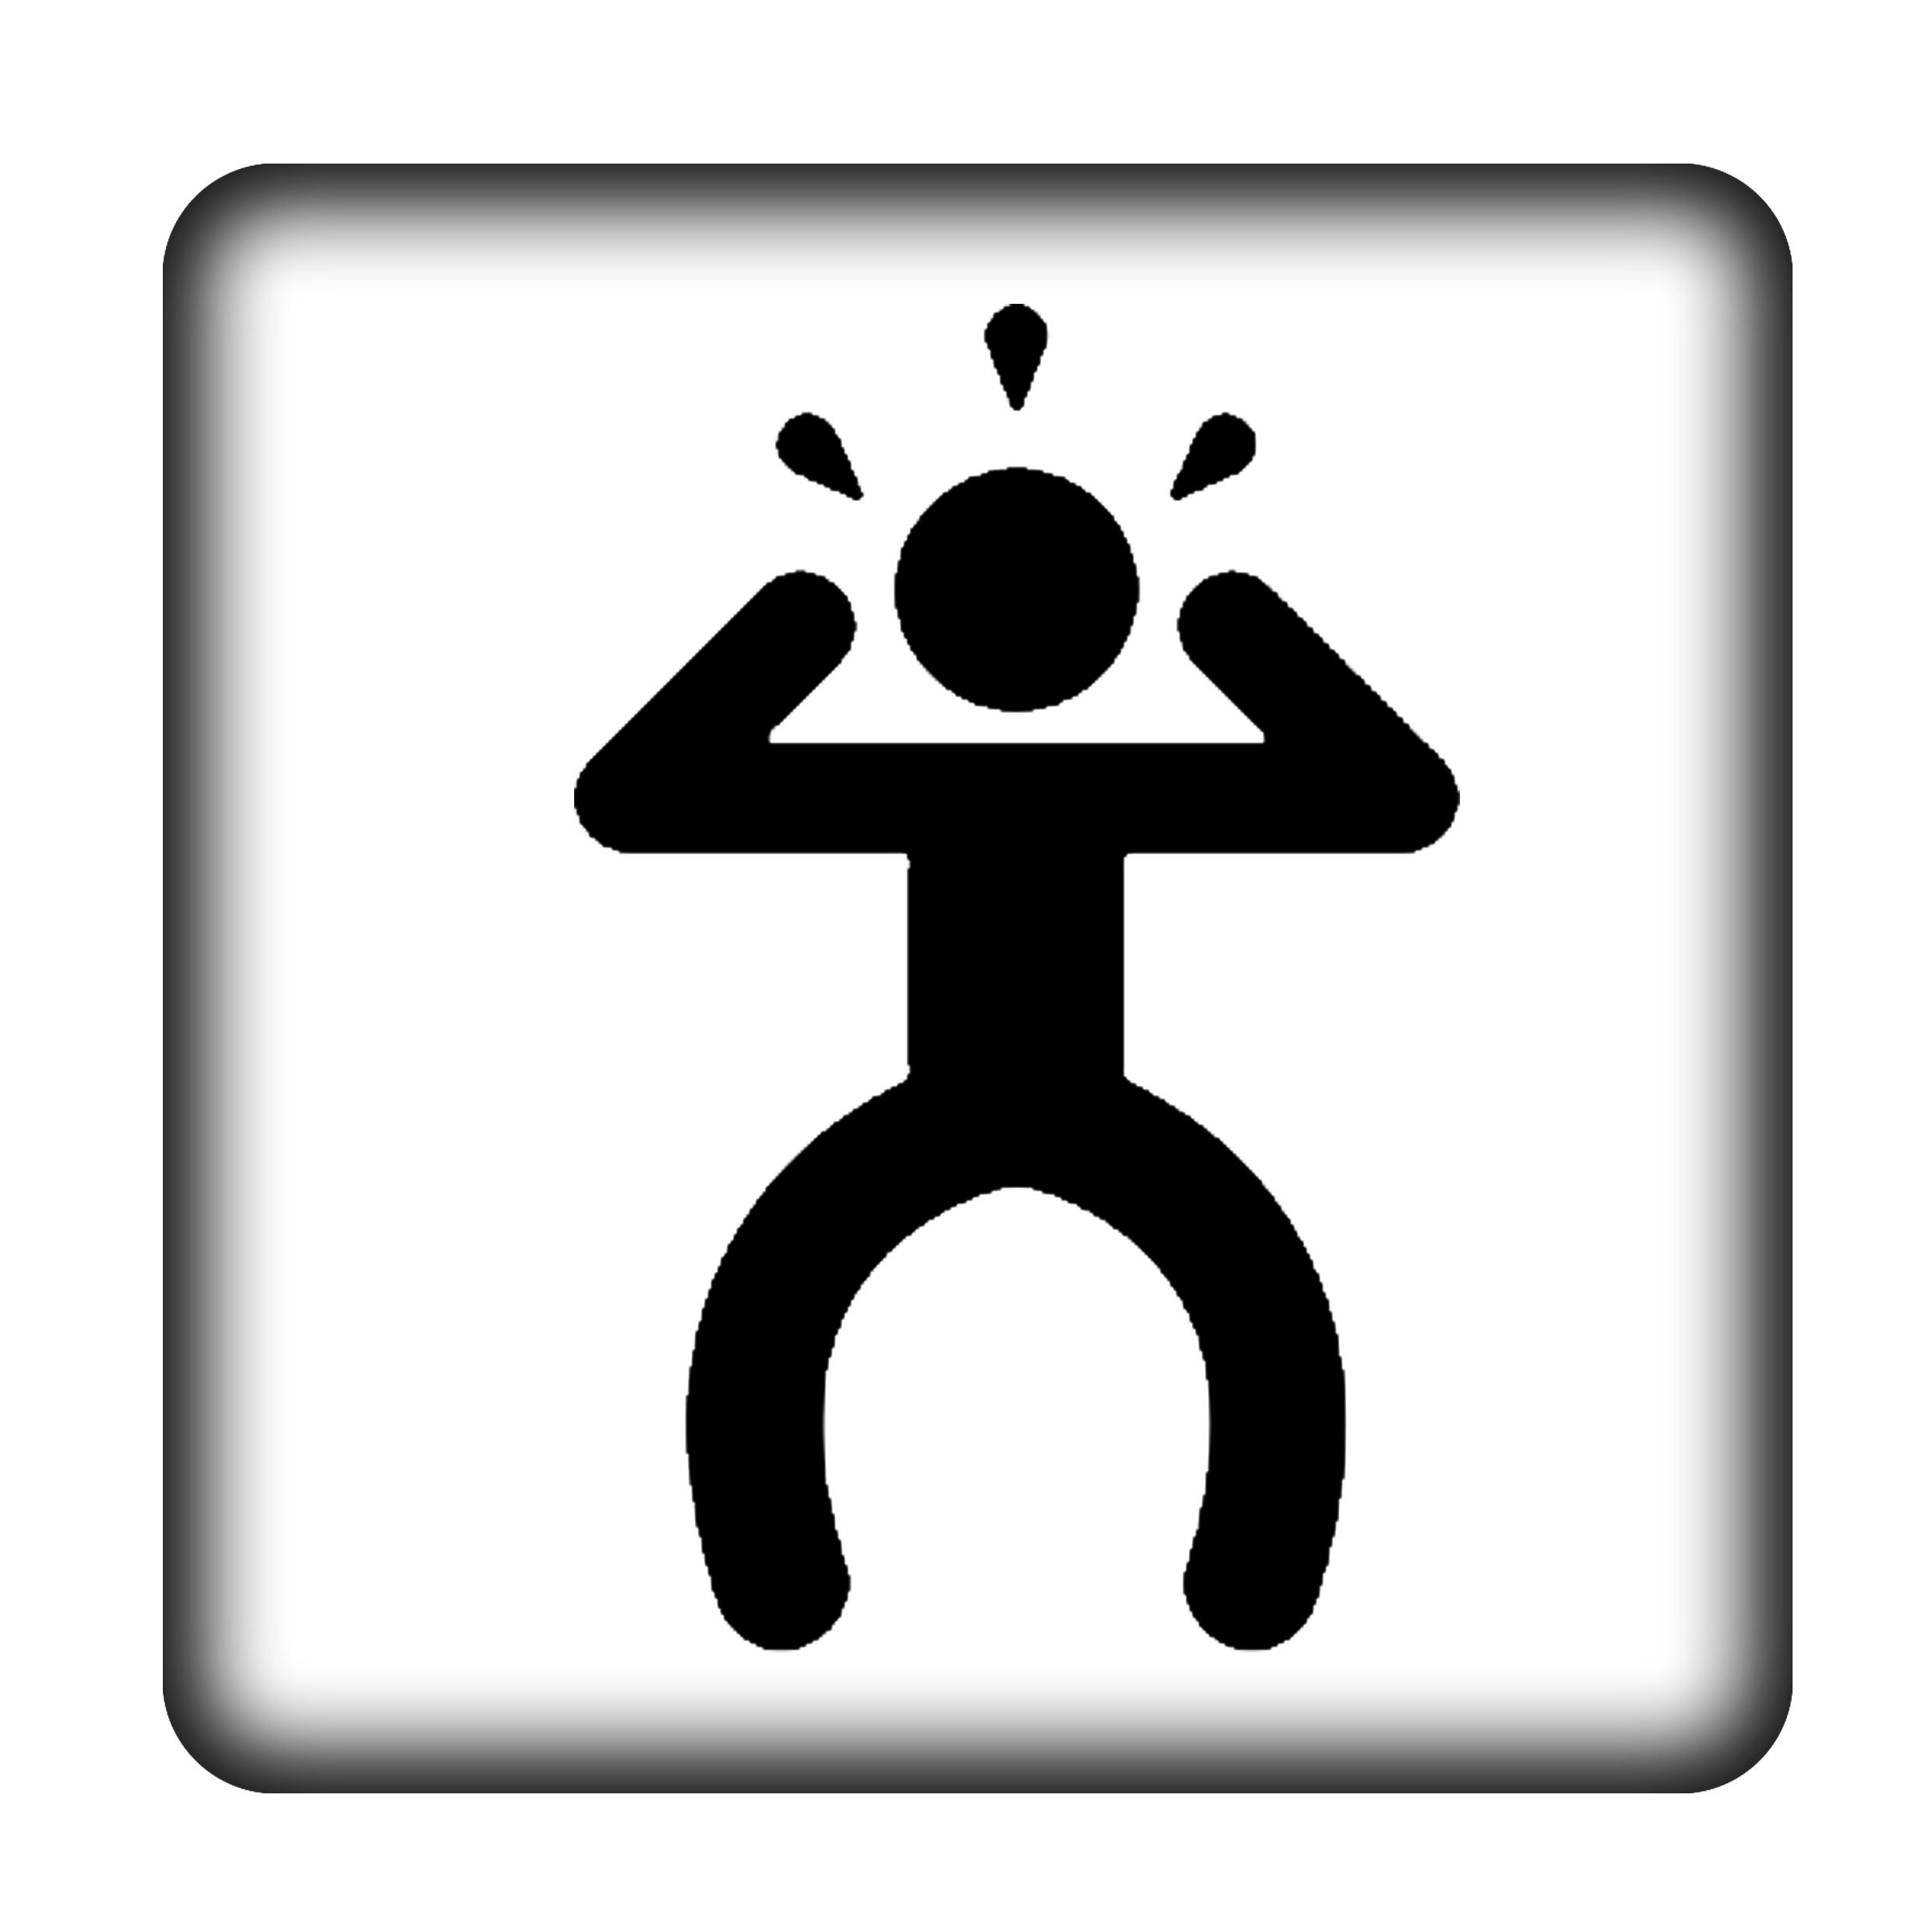 Stress icons | Noun Project